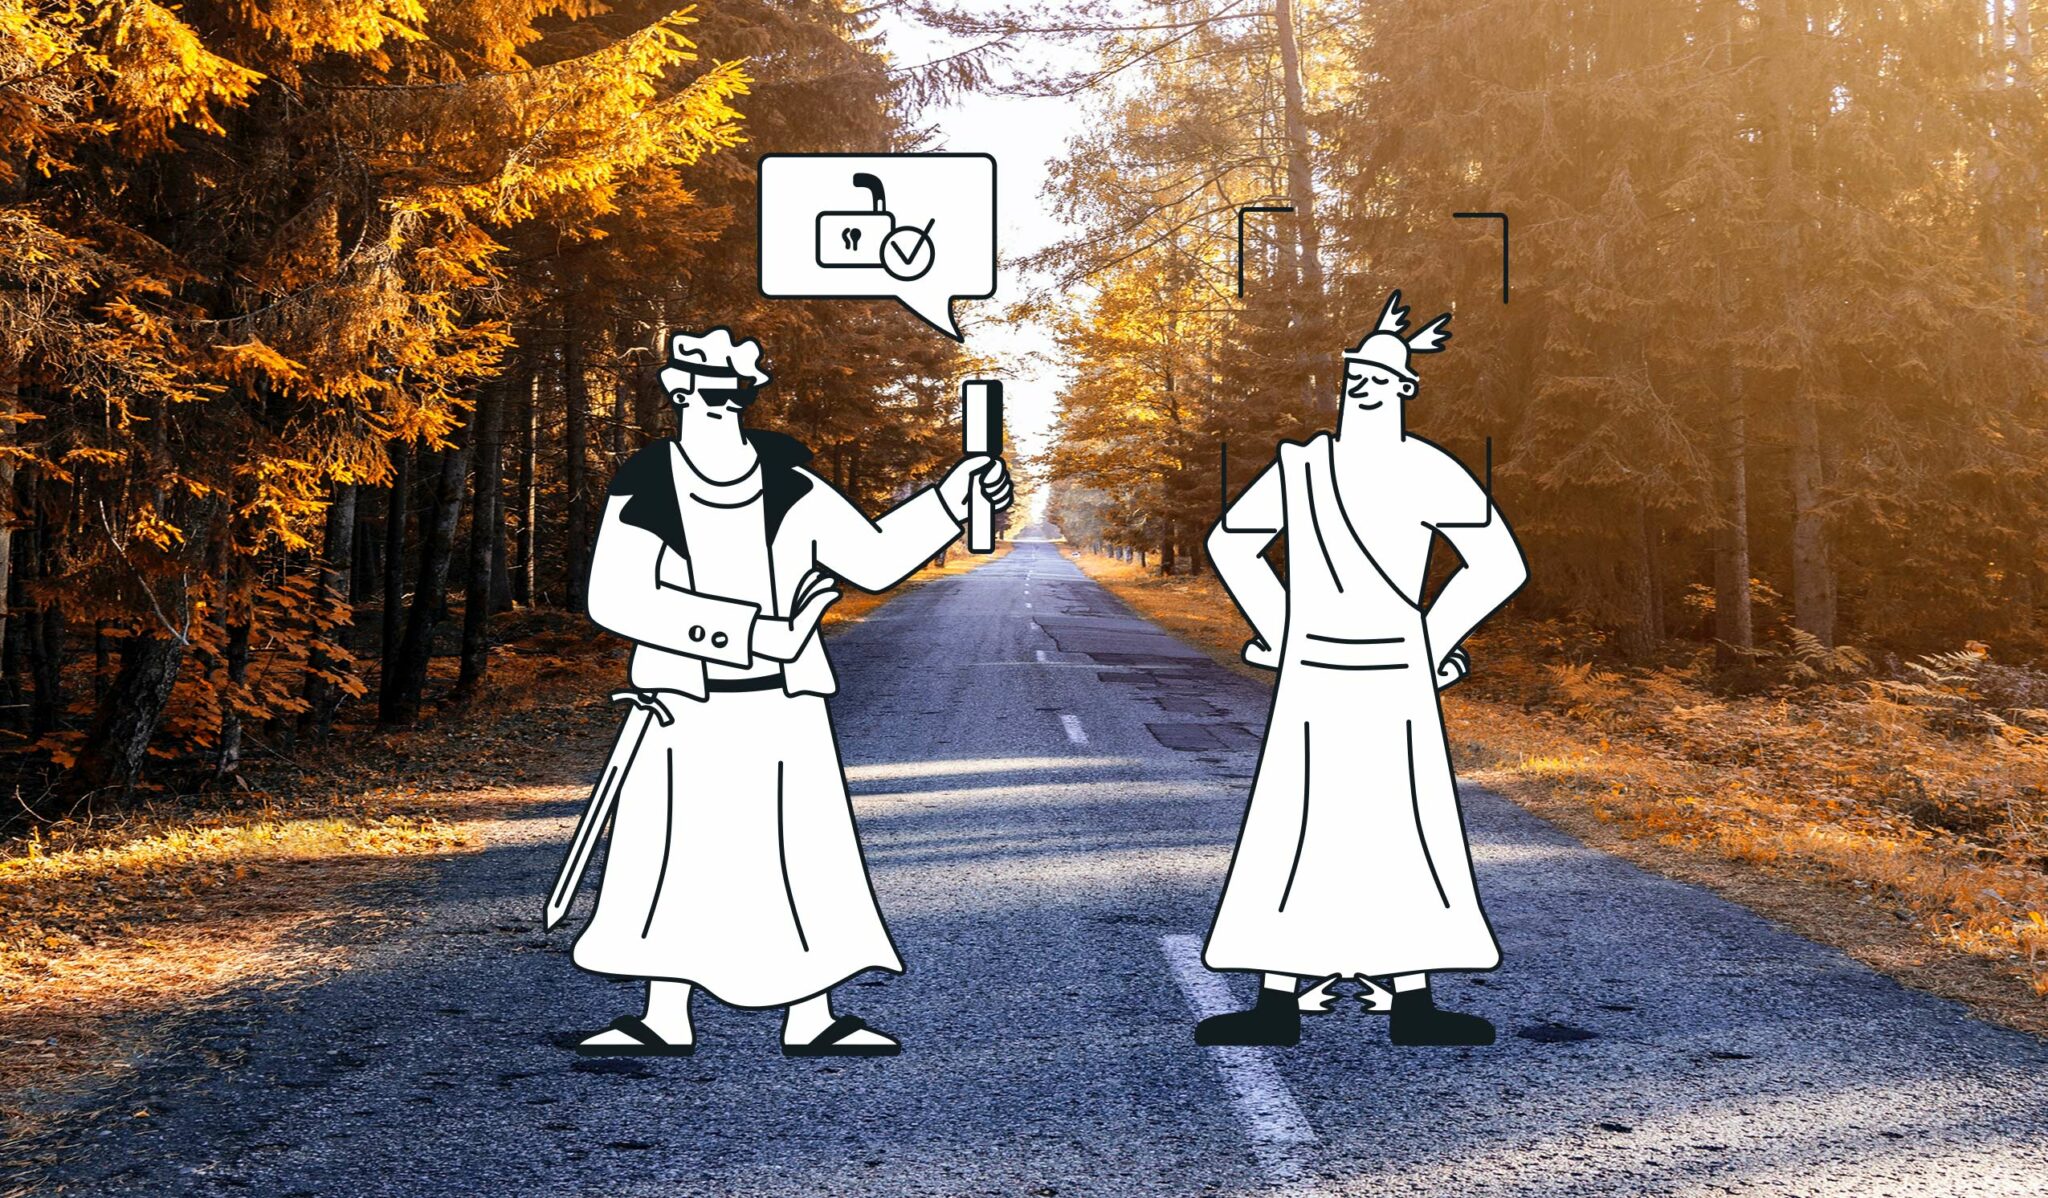 Greek god cartoon characters on wooded path